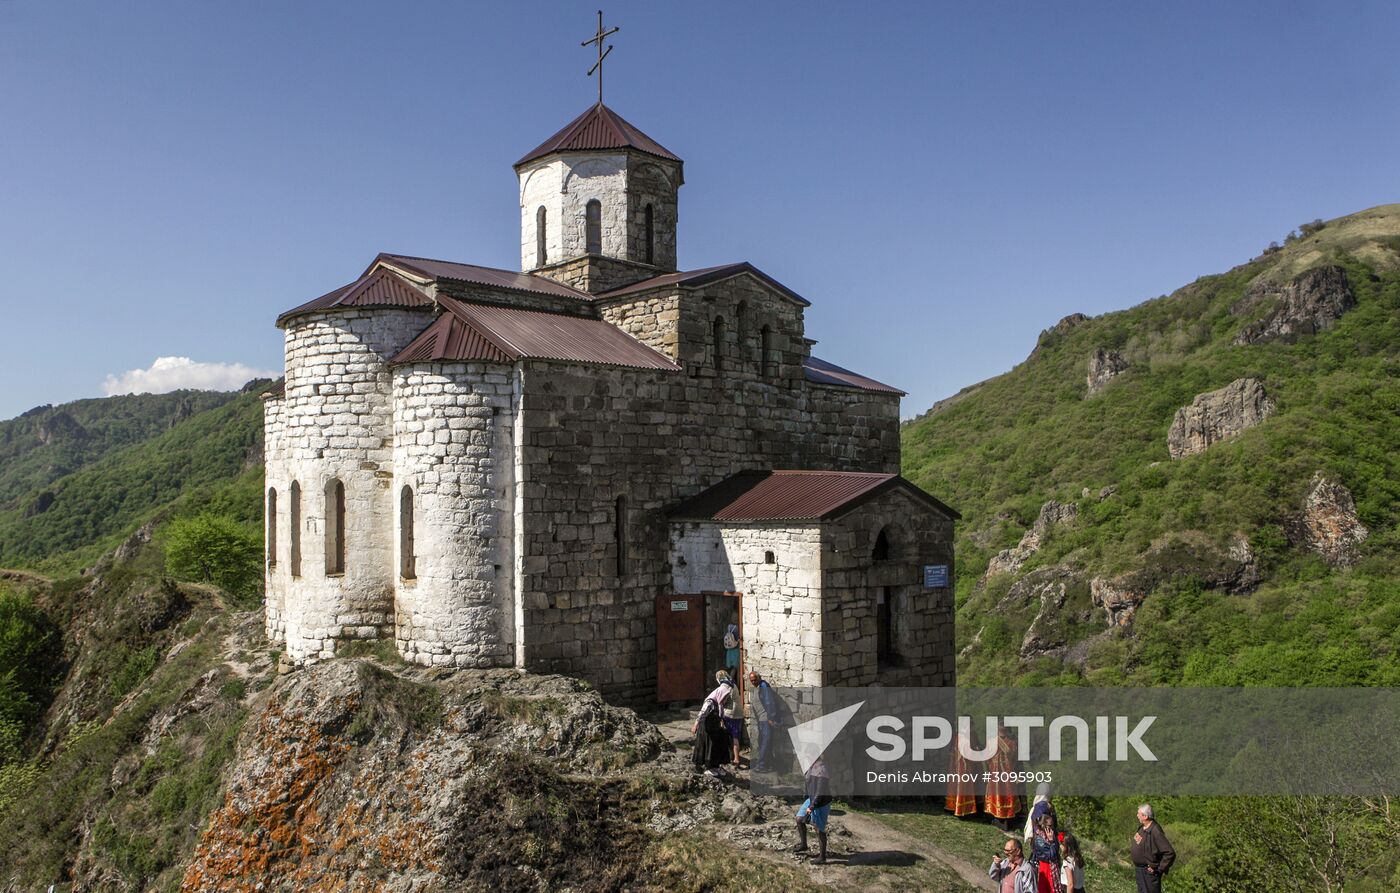 Byzantine epoch cathedrals in the Karachay-Cherkess Republic